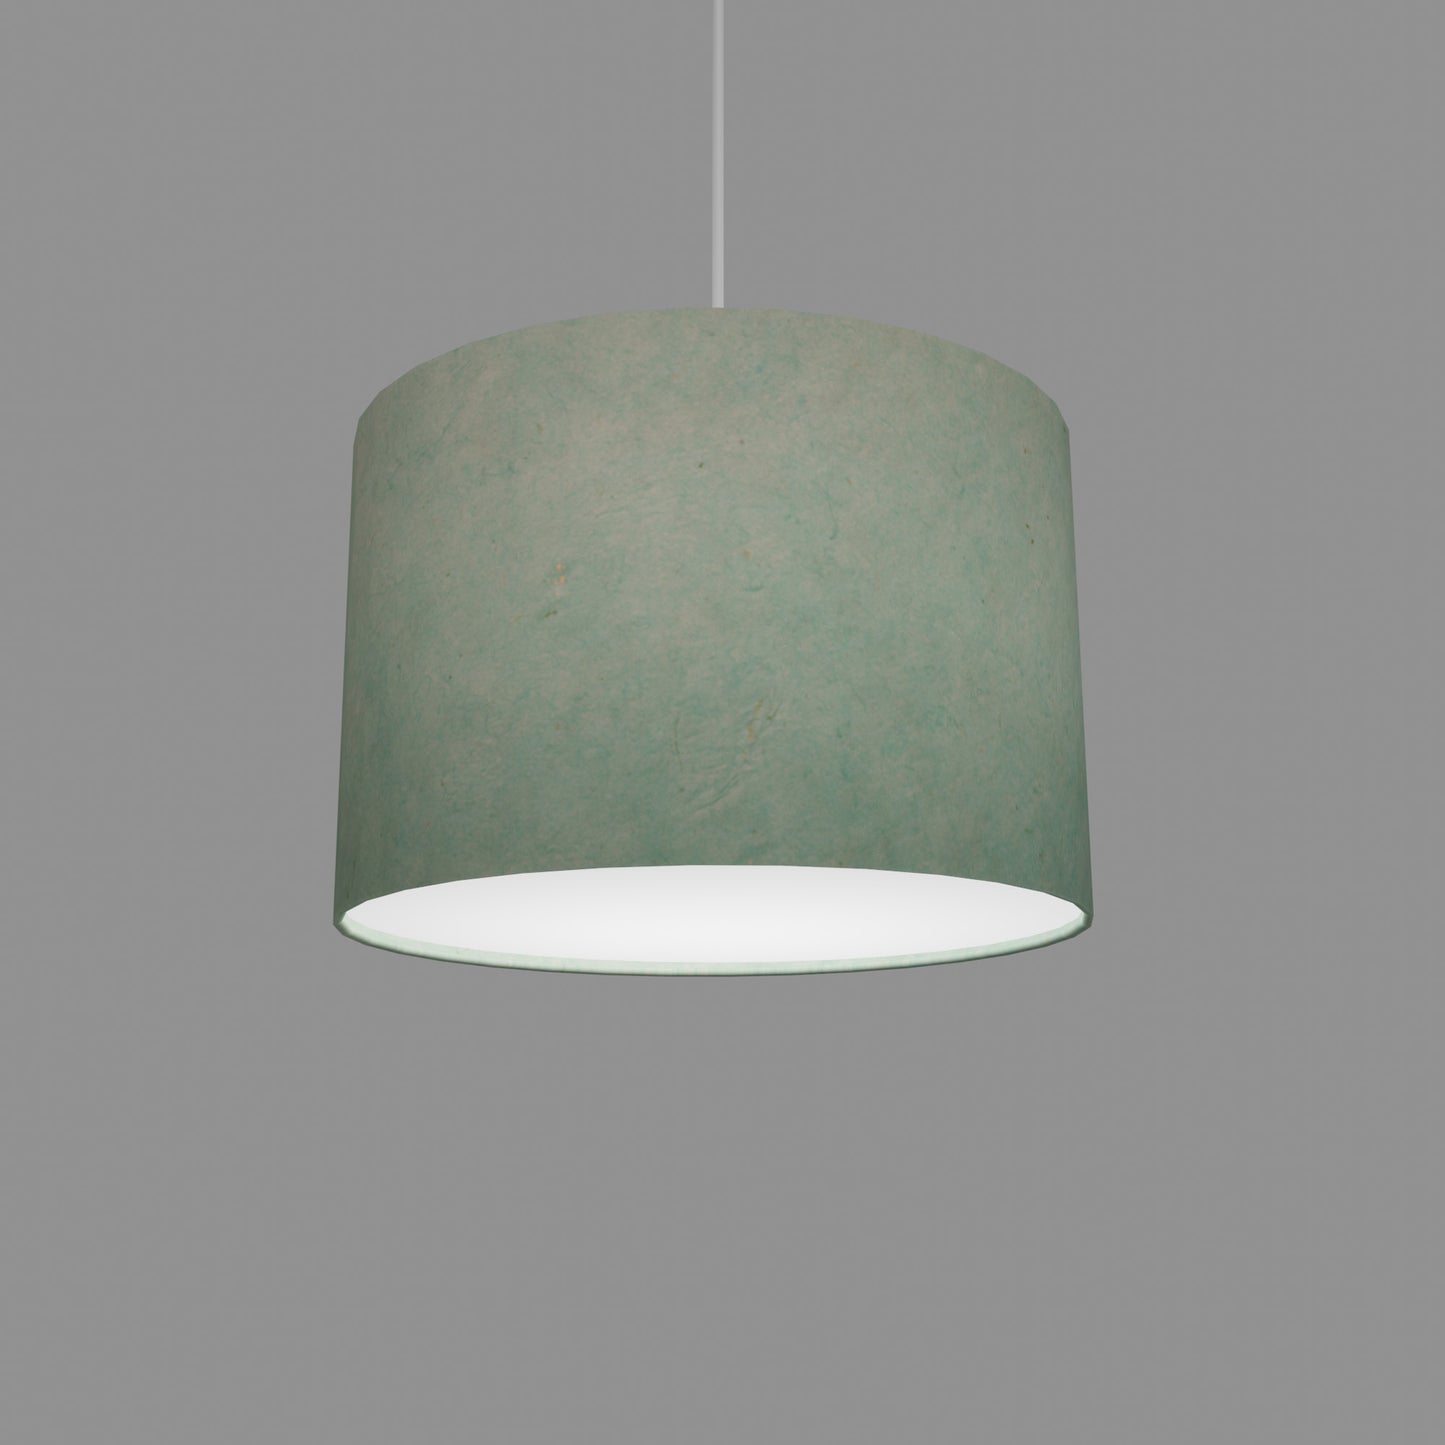 Drum Lamp Shade - P65 - Turquoise Lokta, 30cm(d) x 20cm(h)